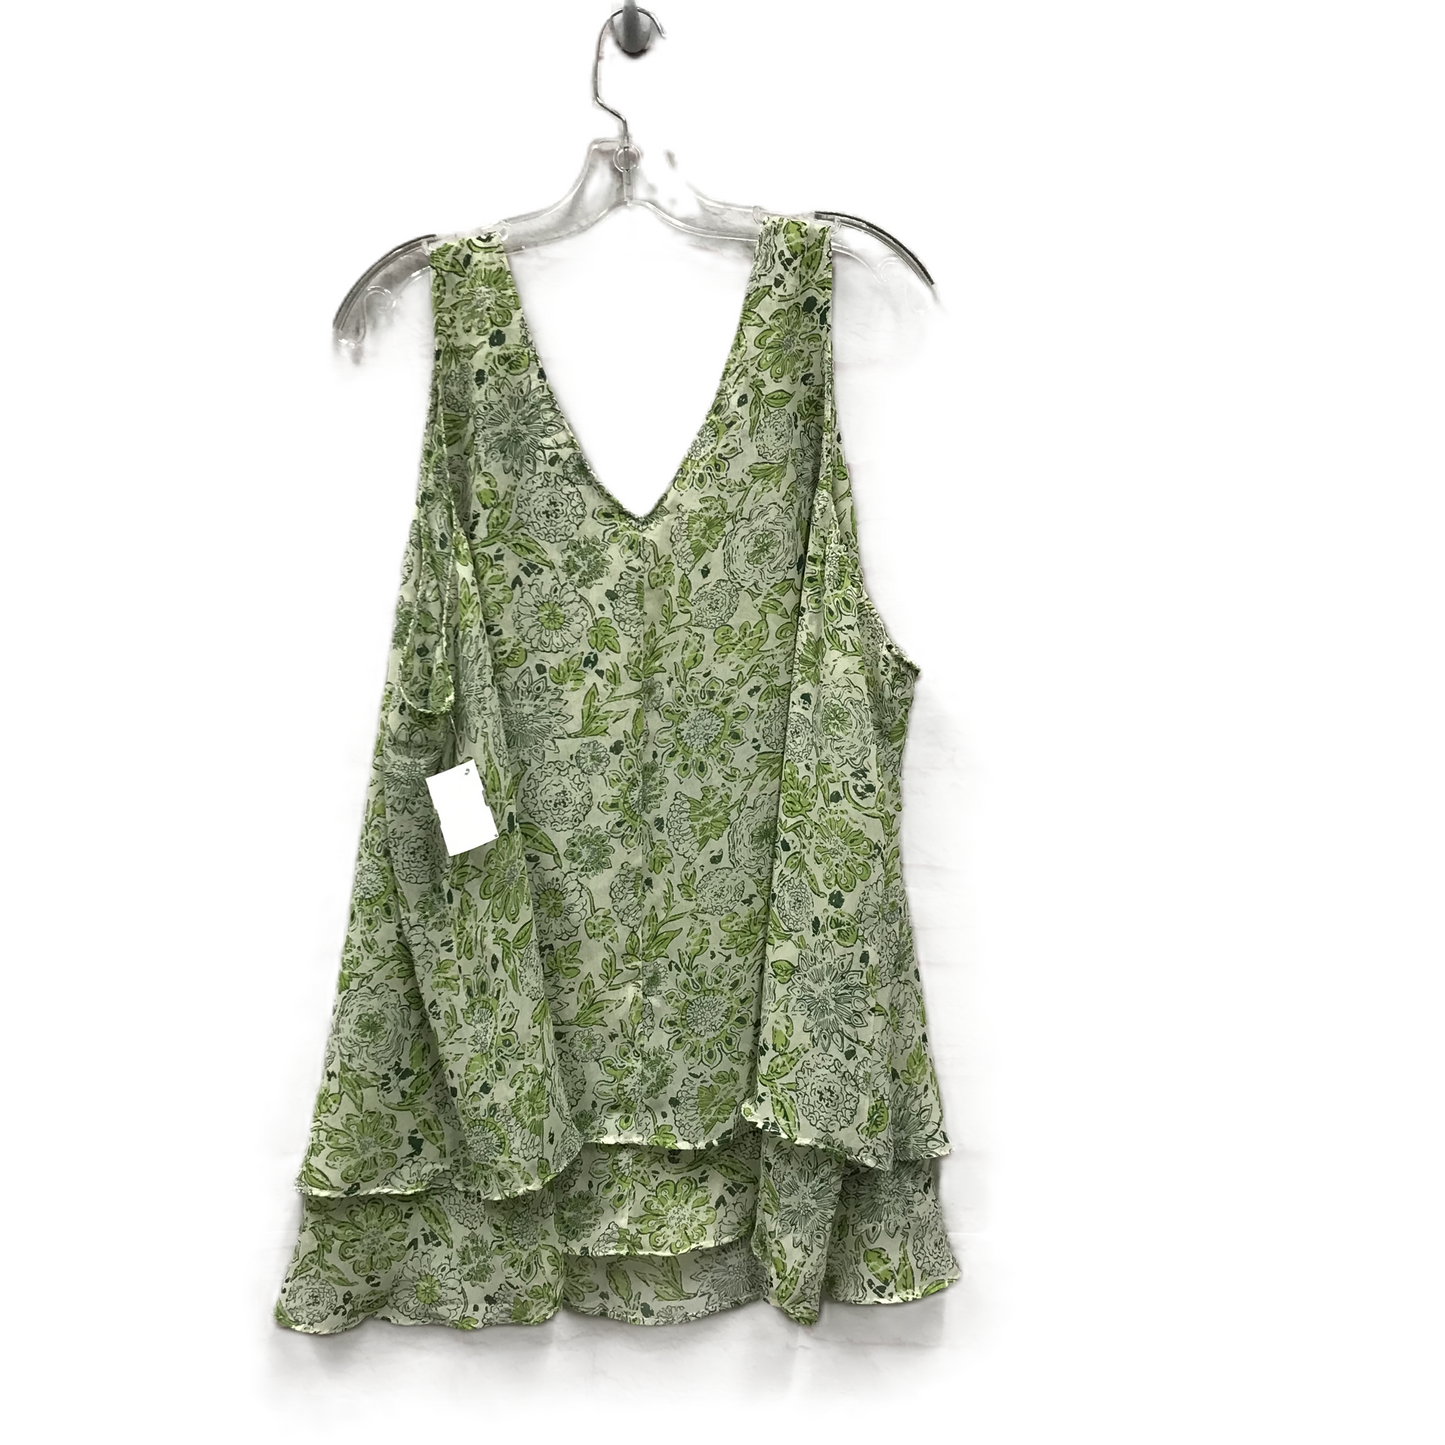 Green Top Sleeveless By Lane Bryant, Size: 3x